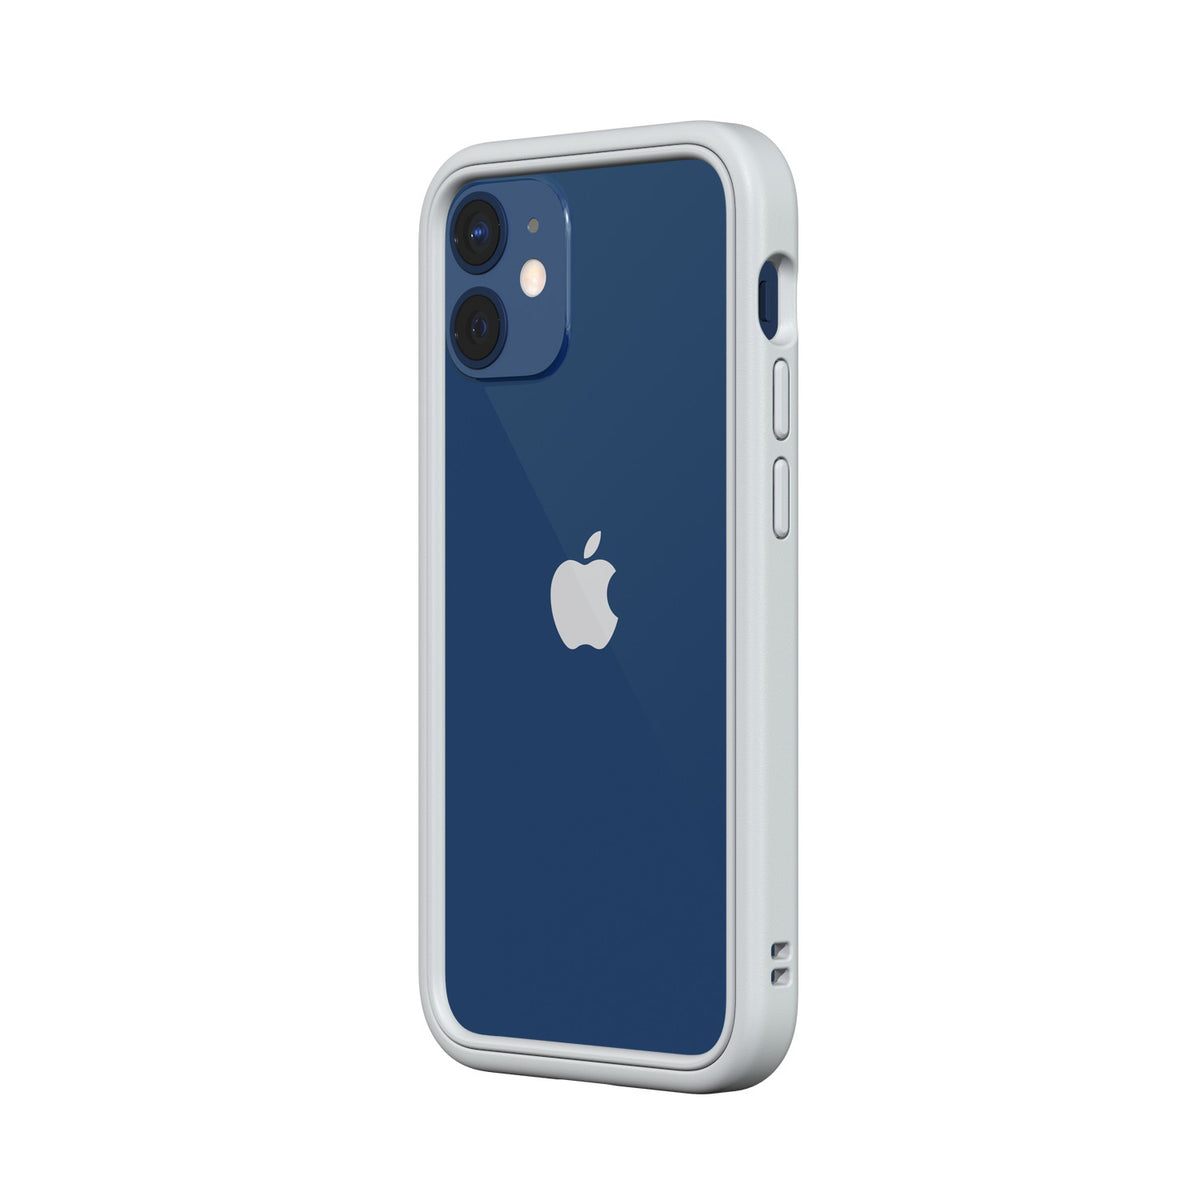 RhinoShield CrashGuard NX Bumper Case For iPhone 12 mini - Platinum Grey |  Mac Addict